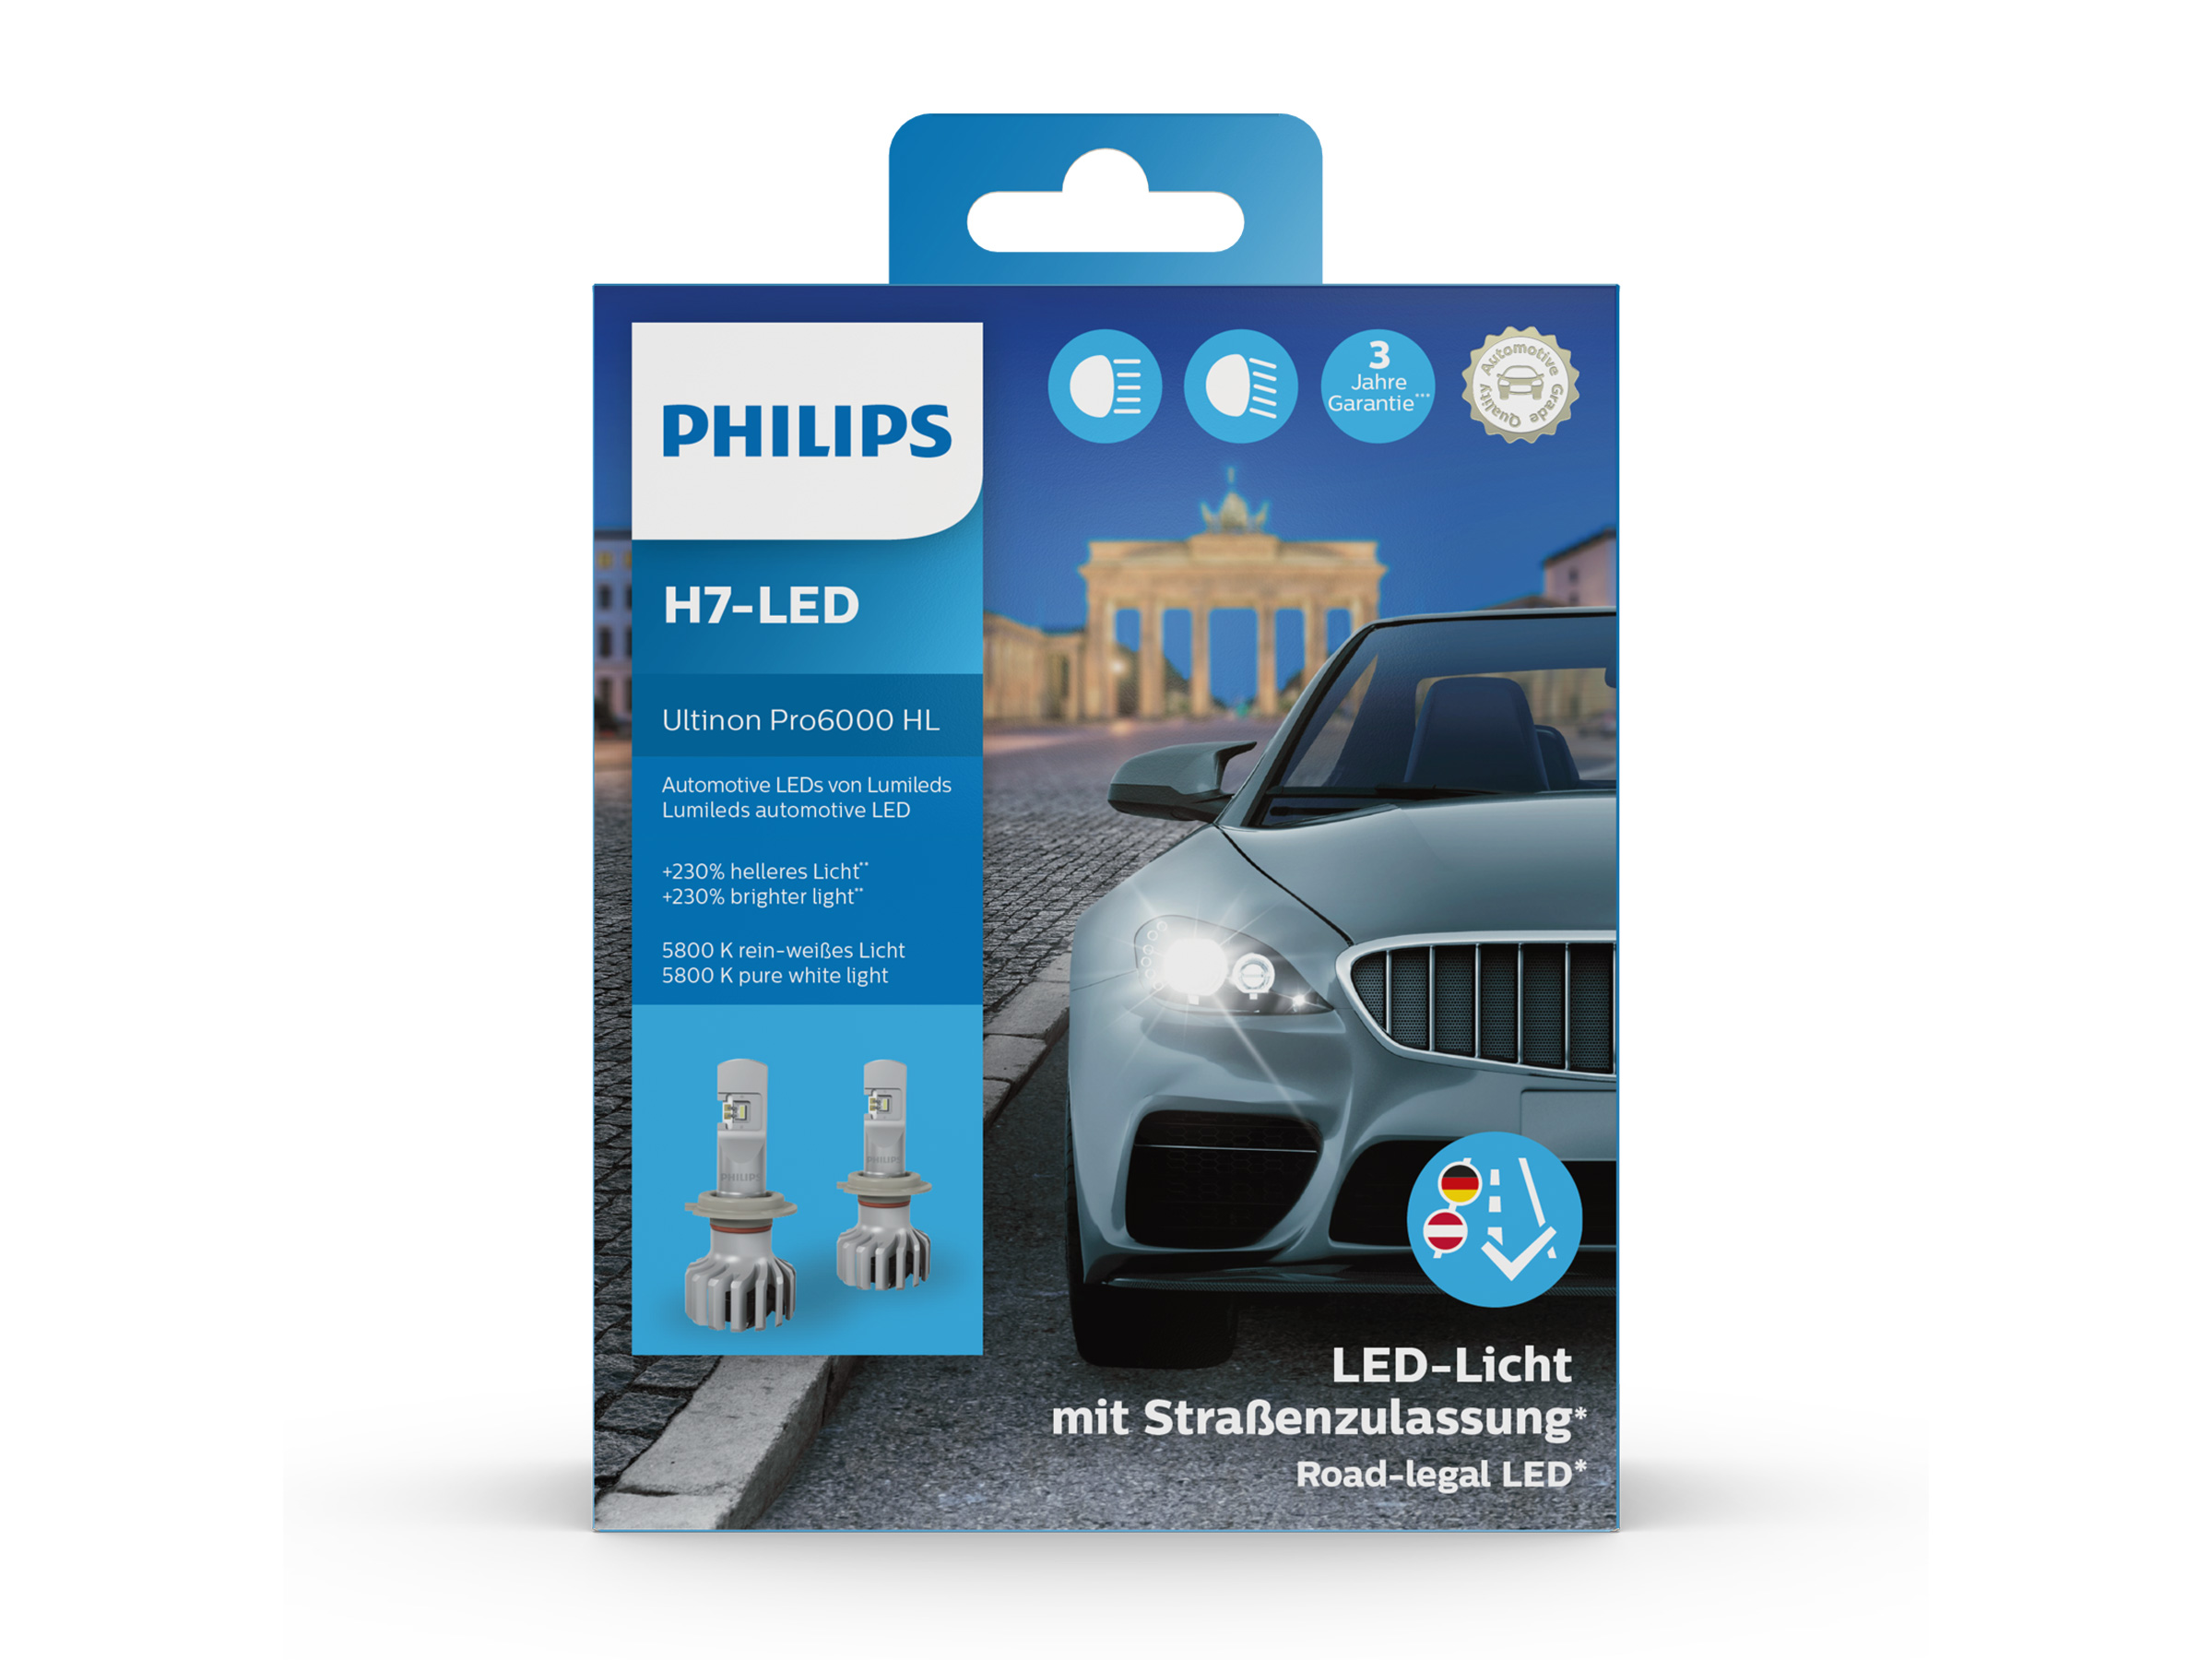 Philips Ultinon Pro6000 H7 LED für Audi A4 Typ B8 2011-2015 mit  Straßenzulassung - 11972U6000X2